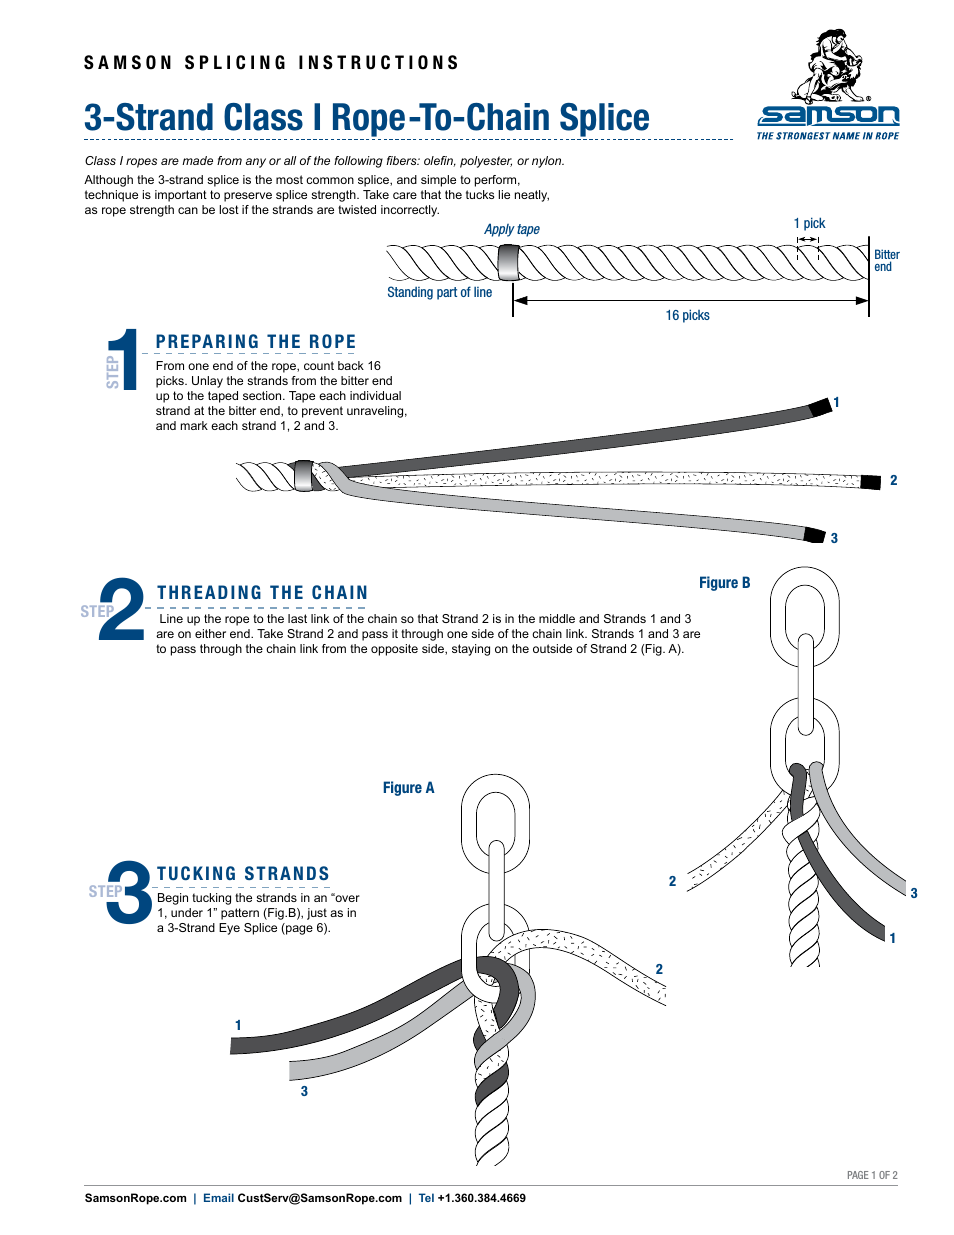 3-STRAND Class I Rope-to-Chain Splice